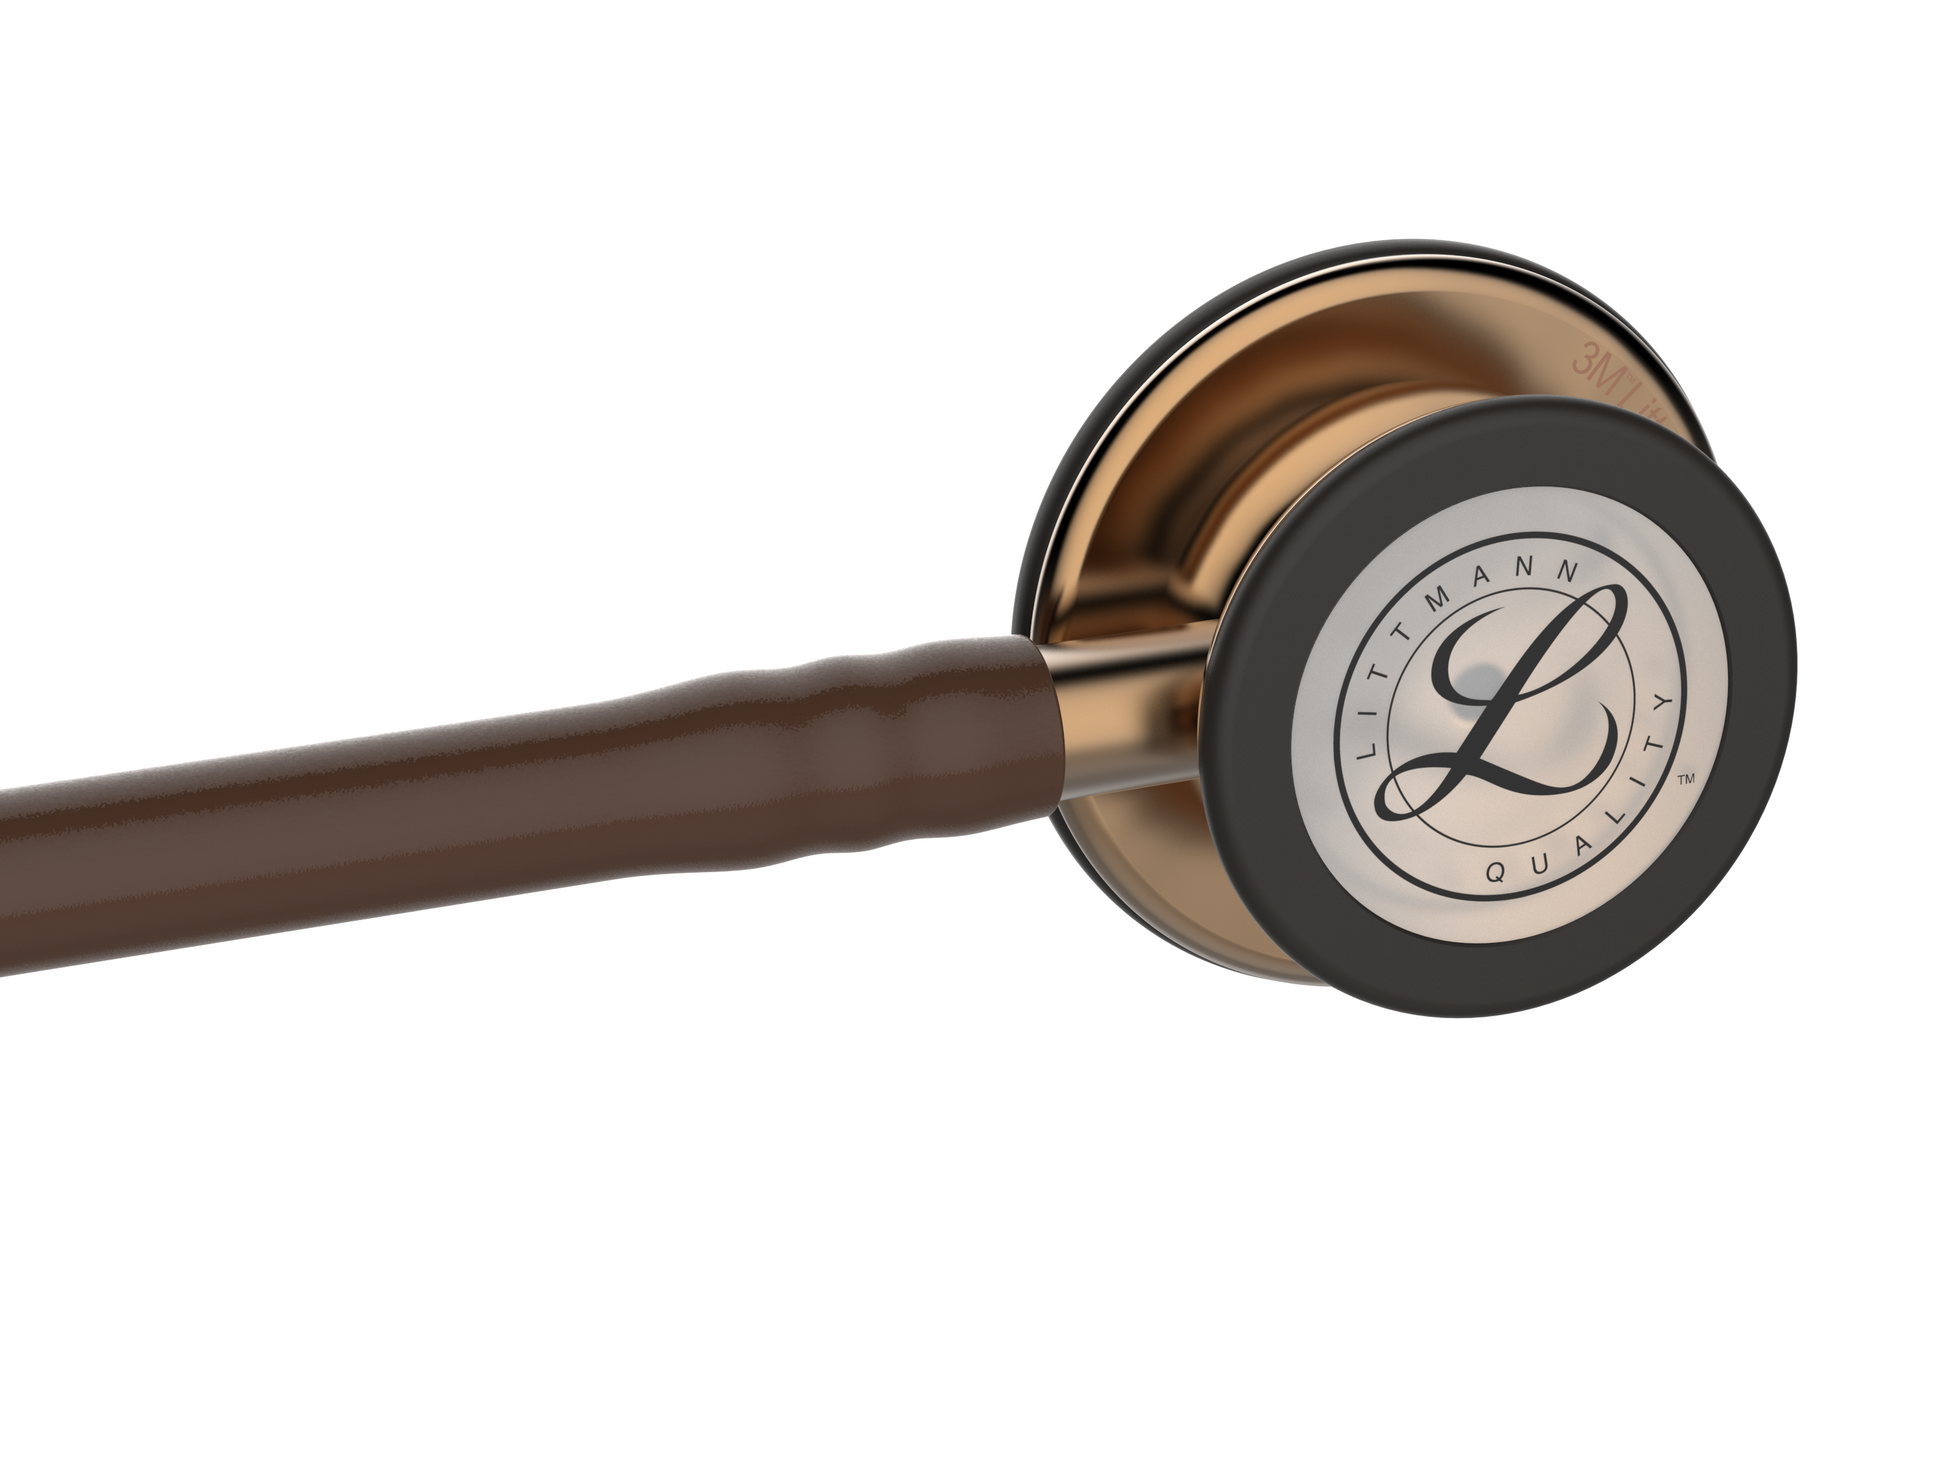 Littmann Classic III Stethoscope: Chocolate & Copper 5809 - Student Program 3M Littmann